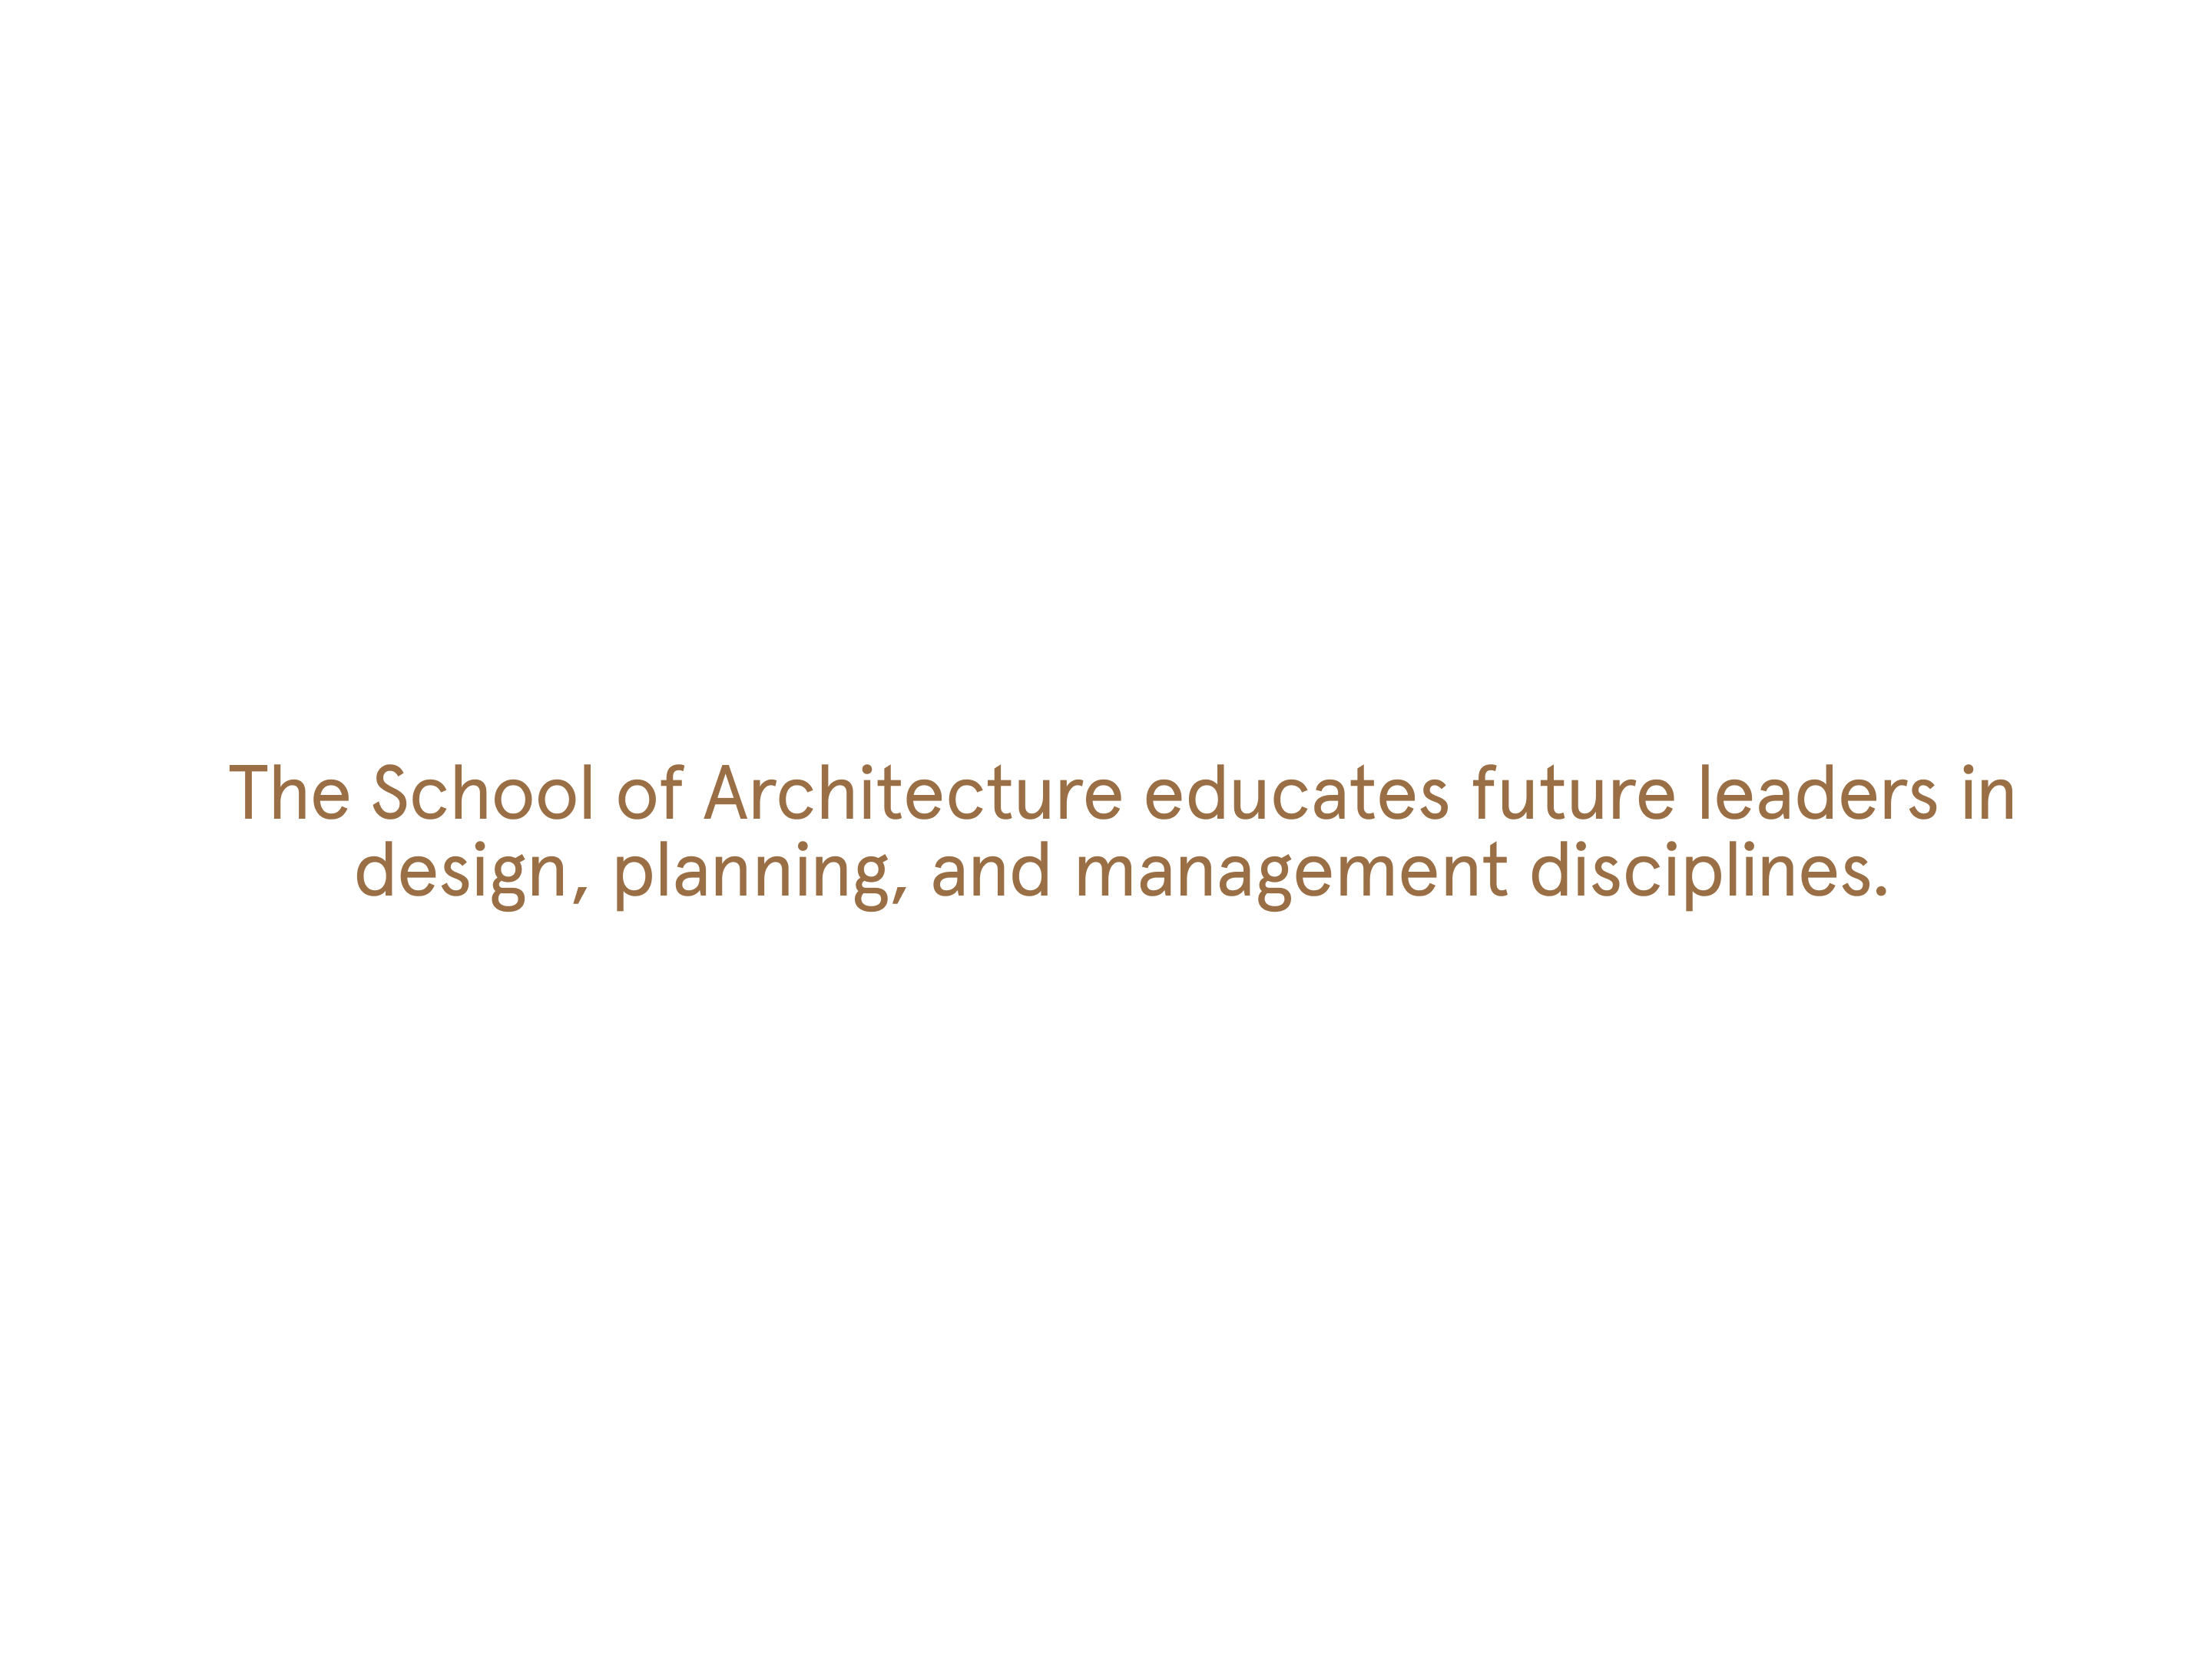 Pratt School of Architecture mission